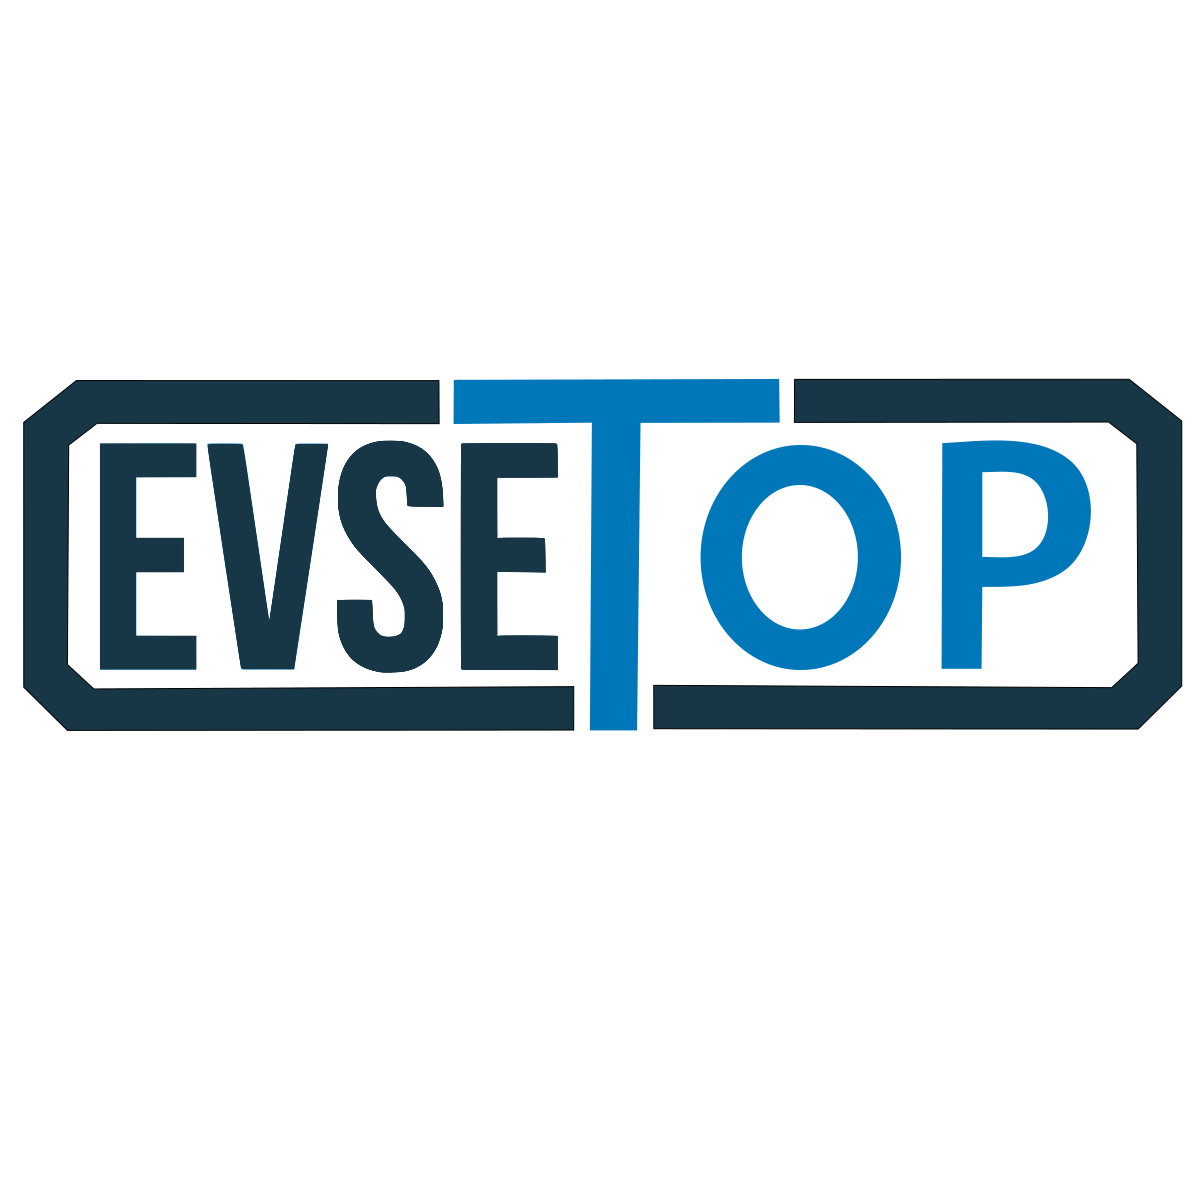 EVSE-TOP